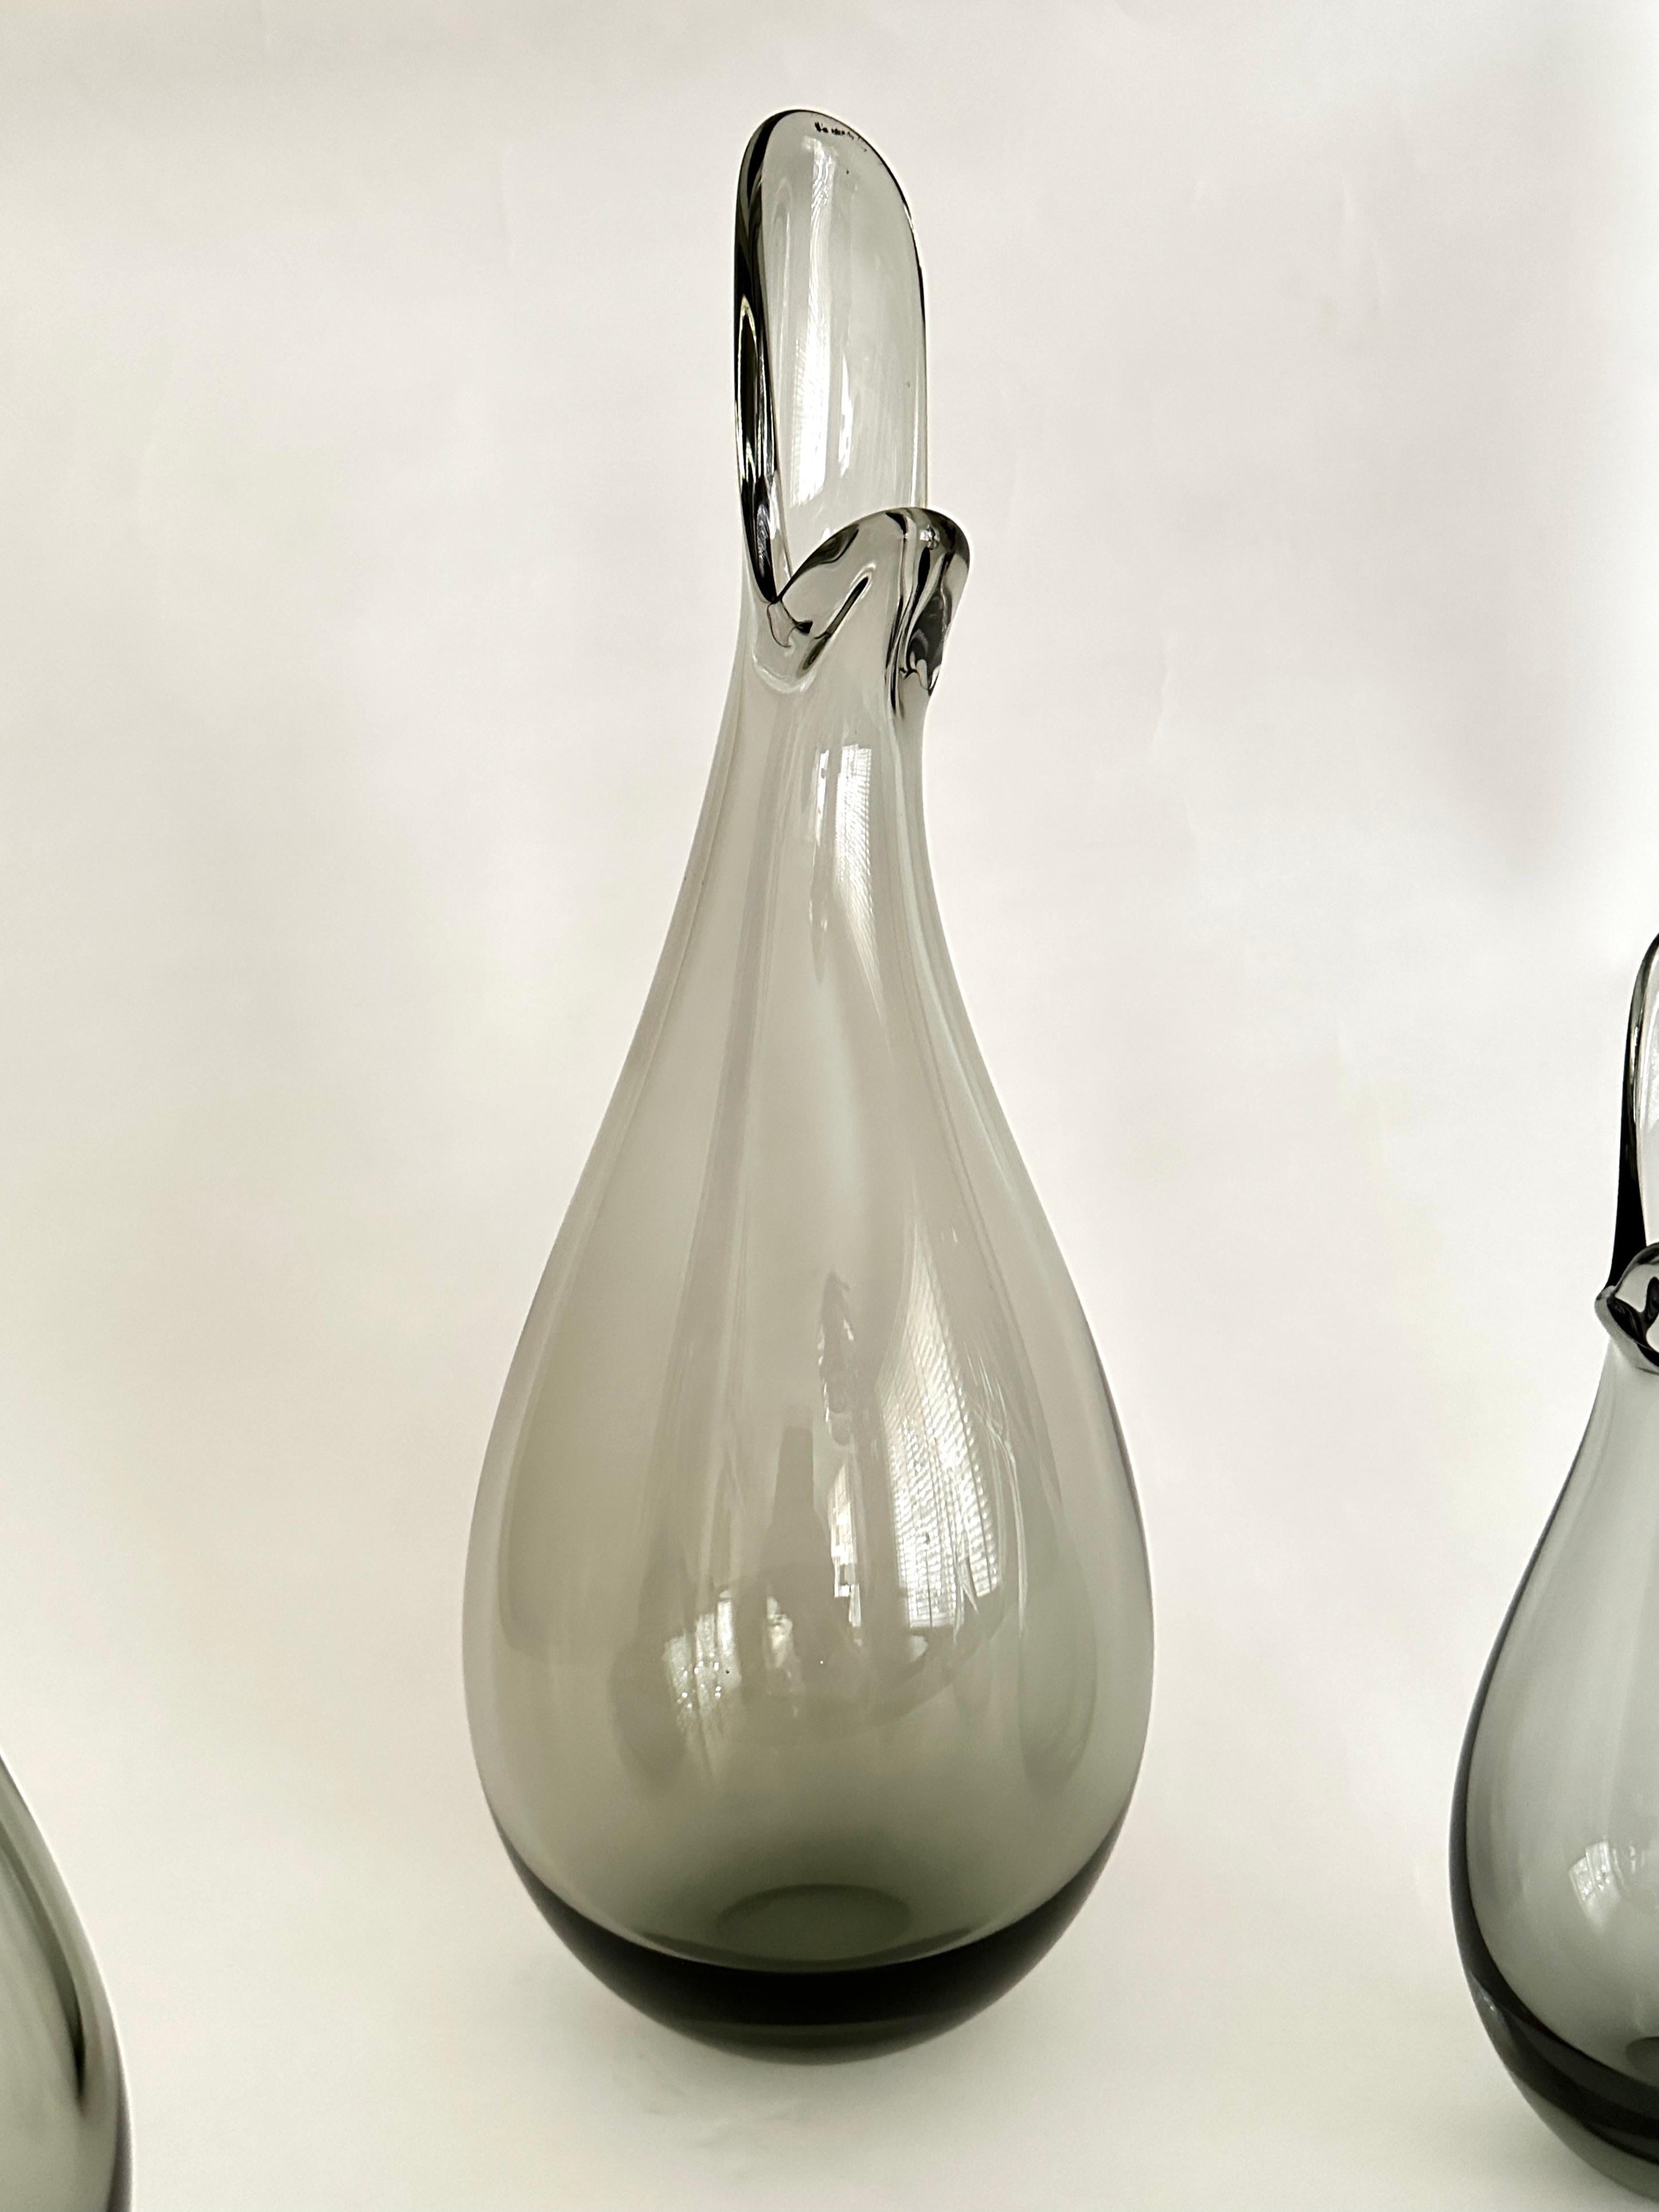 Four Smoky Gray Per Lütken Designed Duckling Vases From Holmegaard In Good Condition For Sale In Doraville, GA